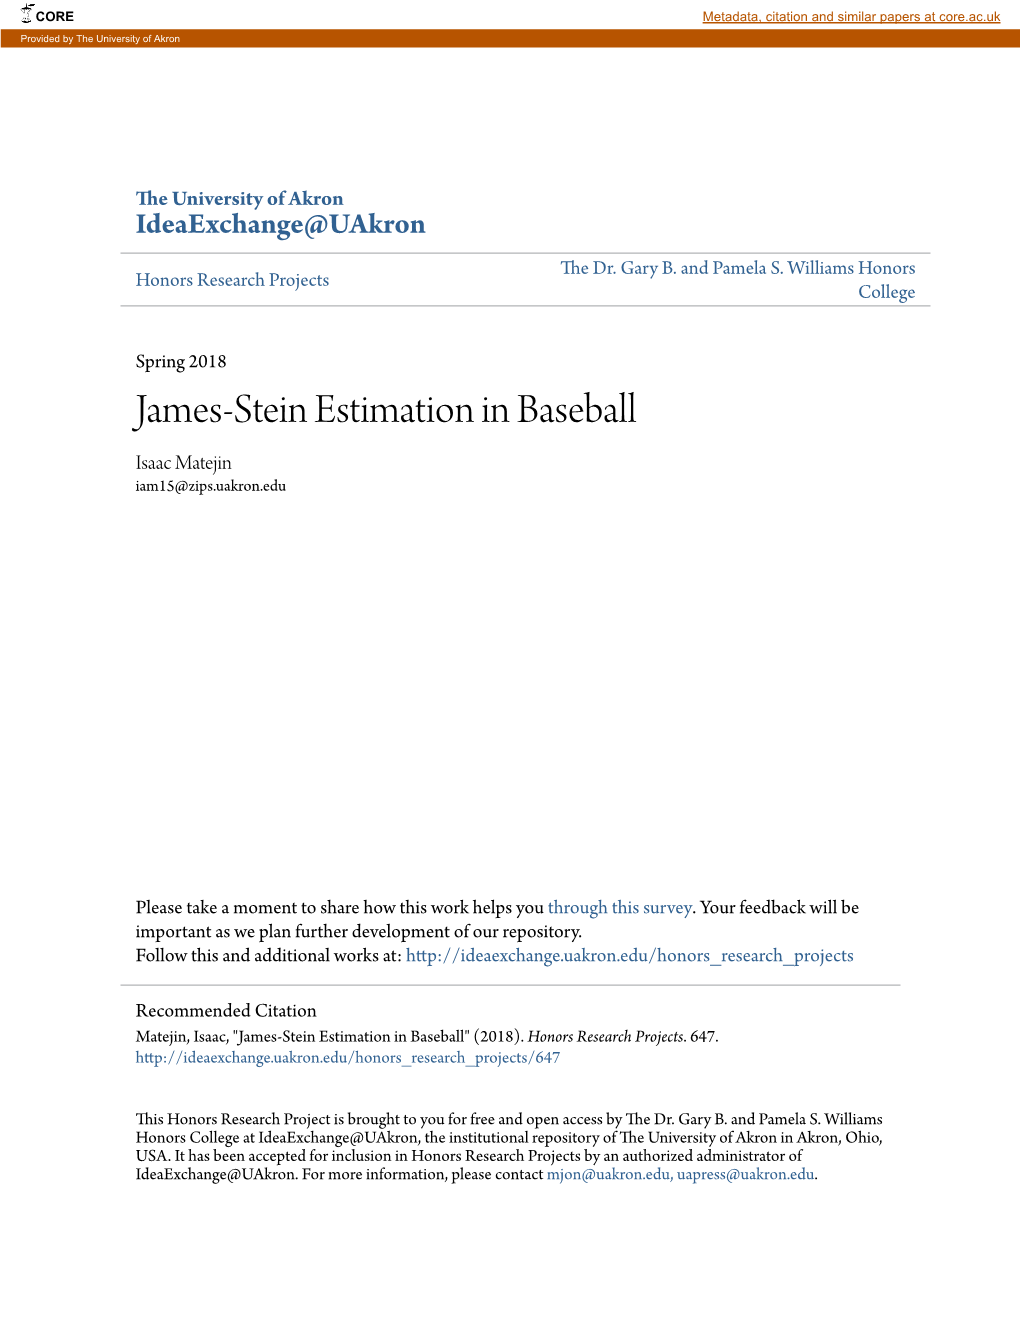 James-Stein Estimation in Baseball Isaac Matejin Iam15@Zips.Uakron.Edu